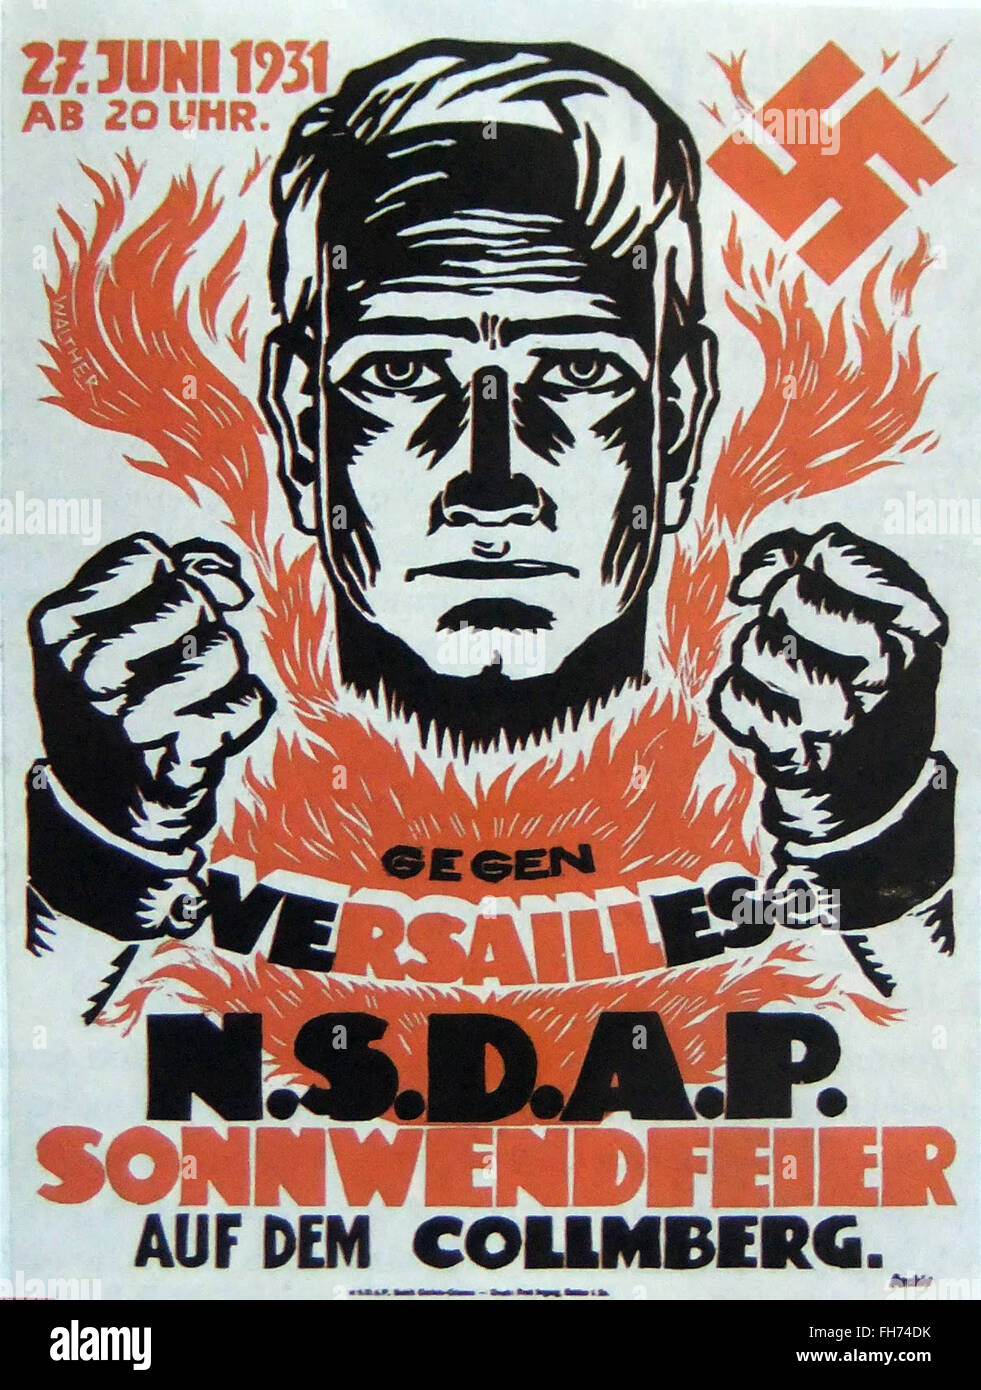 Gegen Versailles N s d a p Sonnwendfeuer - deutsche Nazi-Propaganda Poster - 1931 Stockfoto